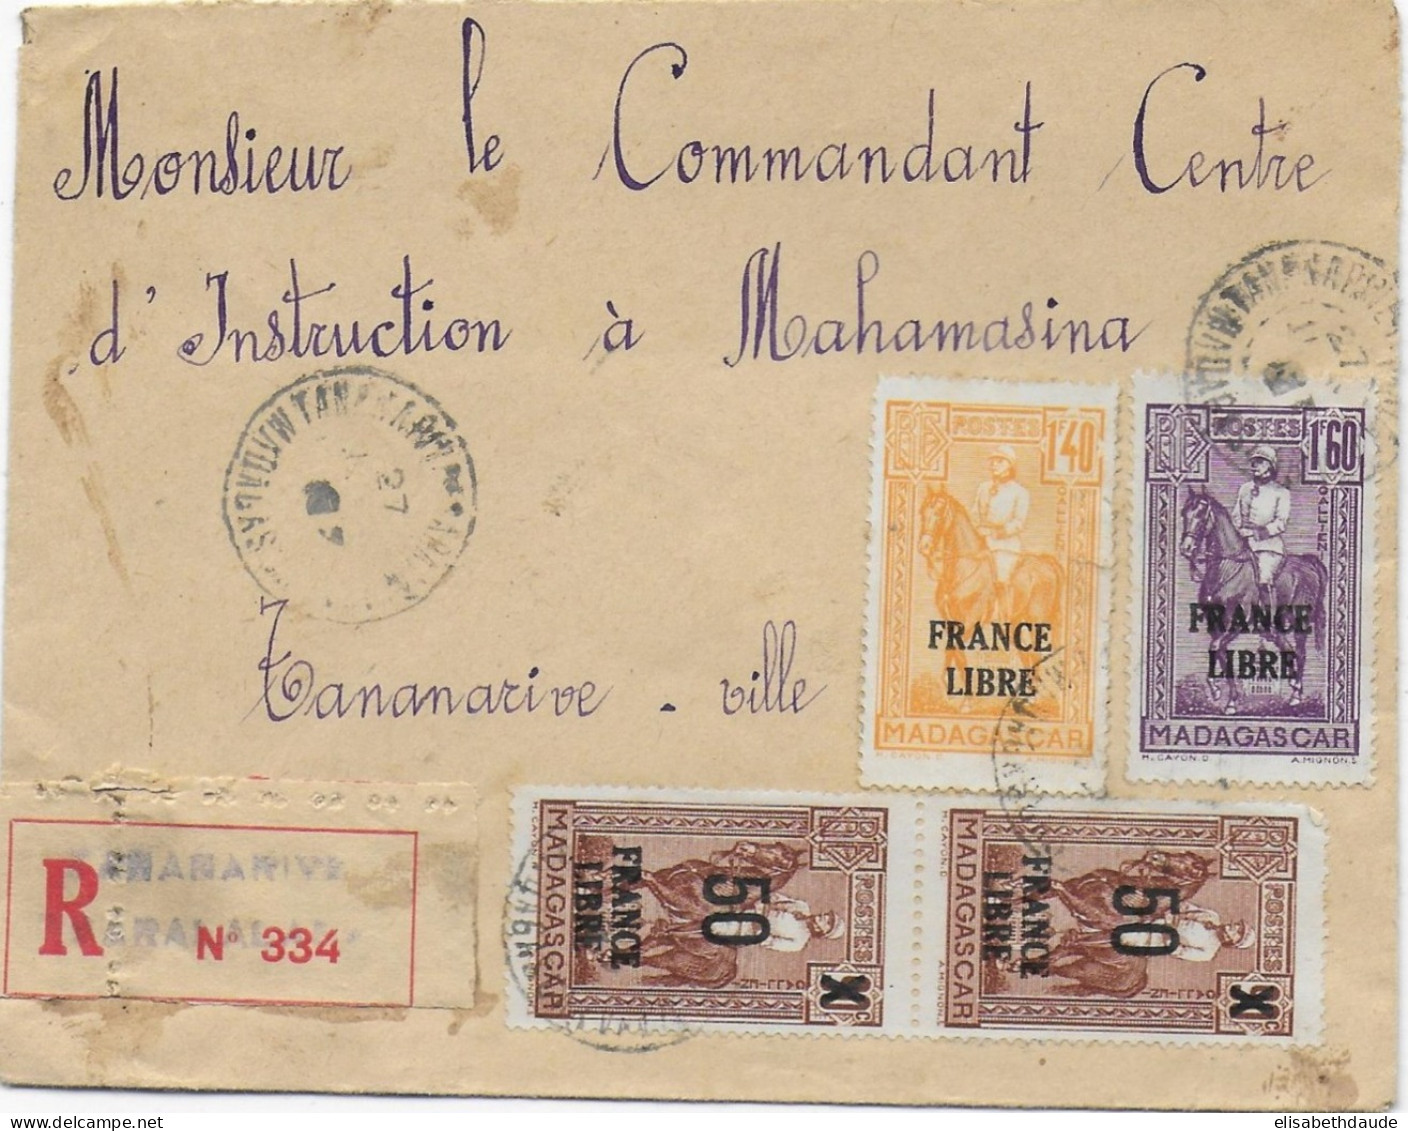 MADAGASCAR - 1943 - FRANCE LIBRE - ENVELOPPE RECOMMANDEE LOCALE De TANANARIVE - Covers & Documents